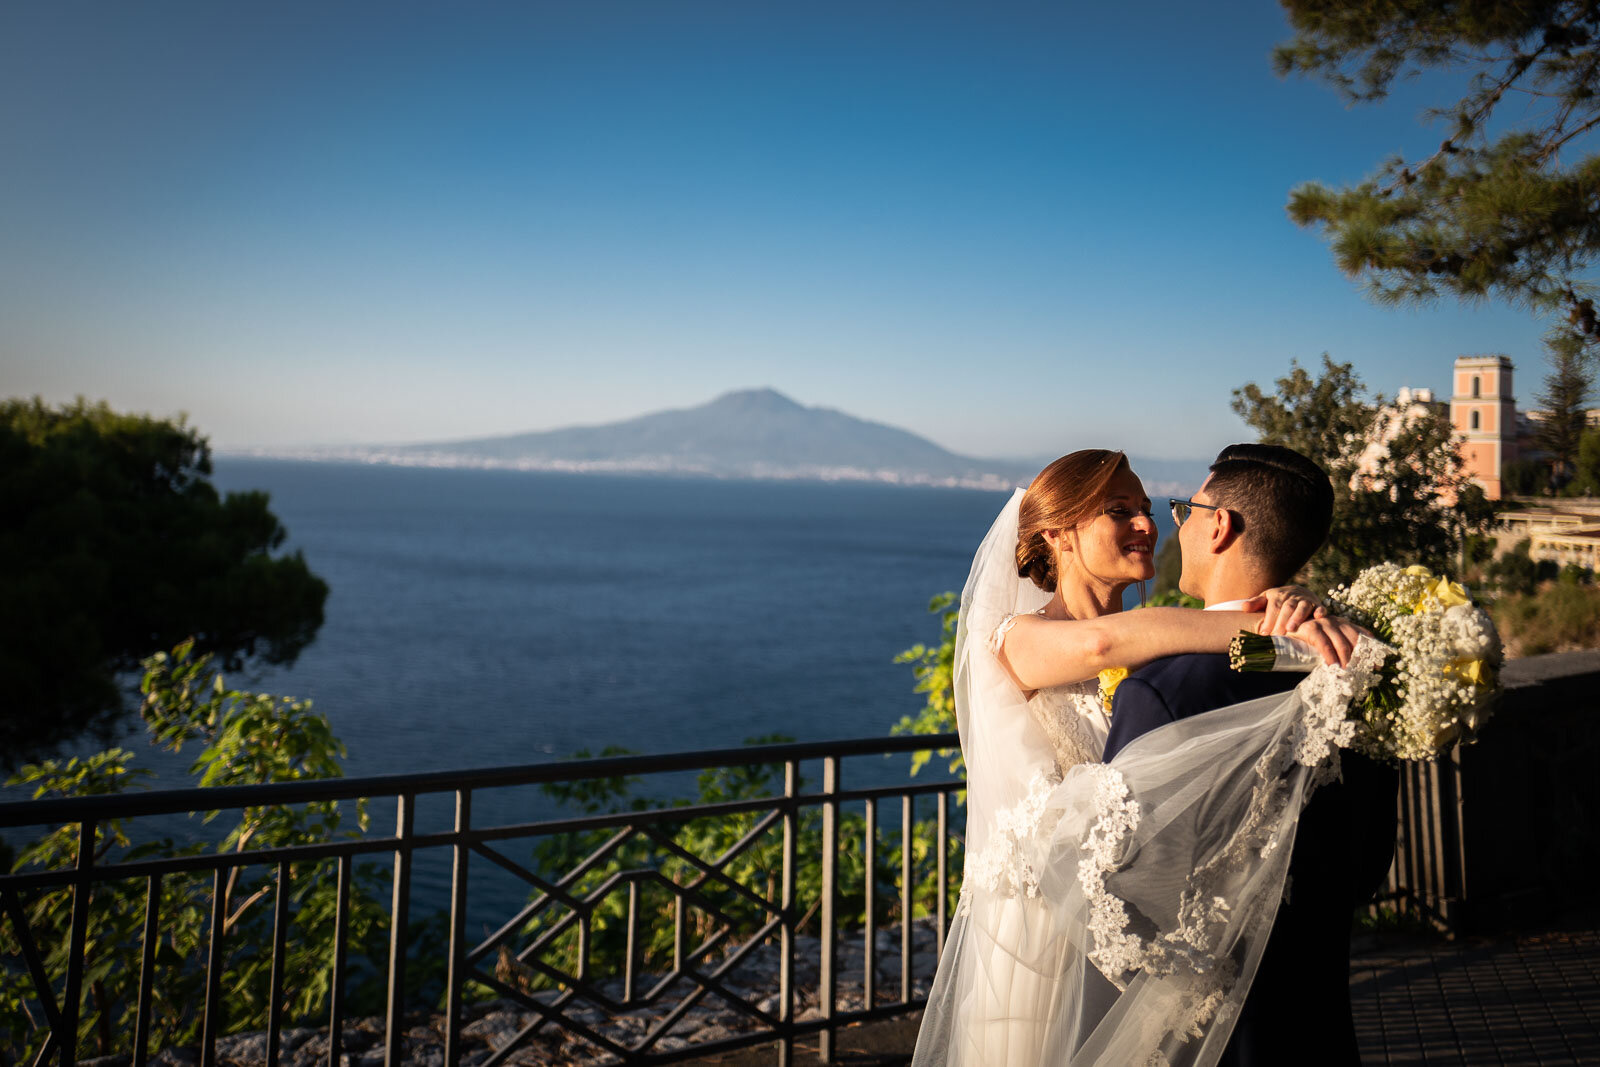 00011-Fotografo-Matrimonio-VicoEquense-fotografo-Sorrento-Napoli-Wedding-Amalfi-Coast-Photographer-VincentAiello.jpg